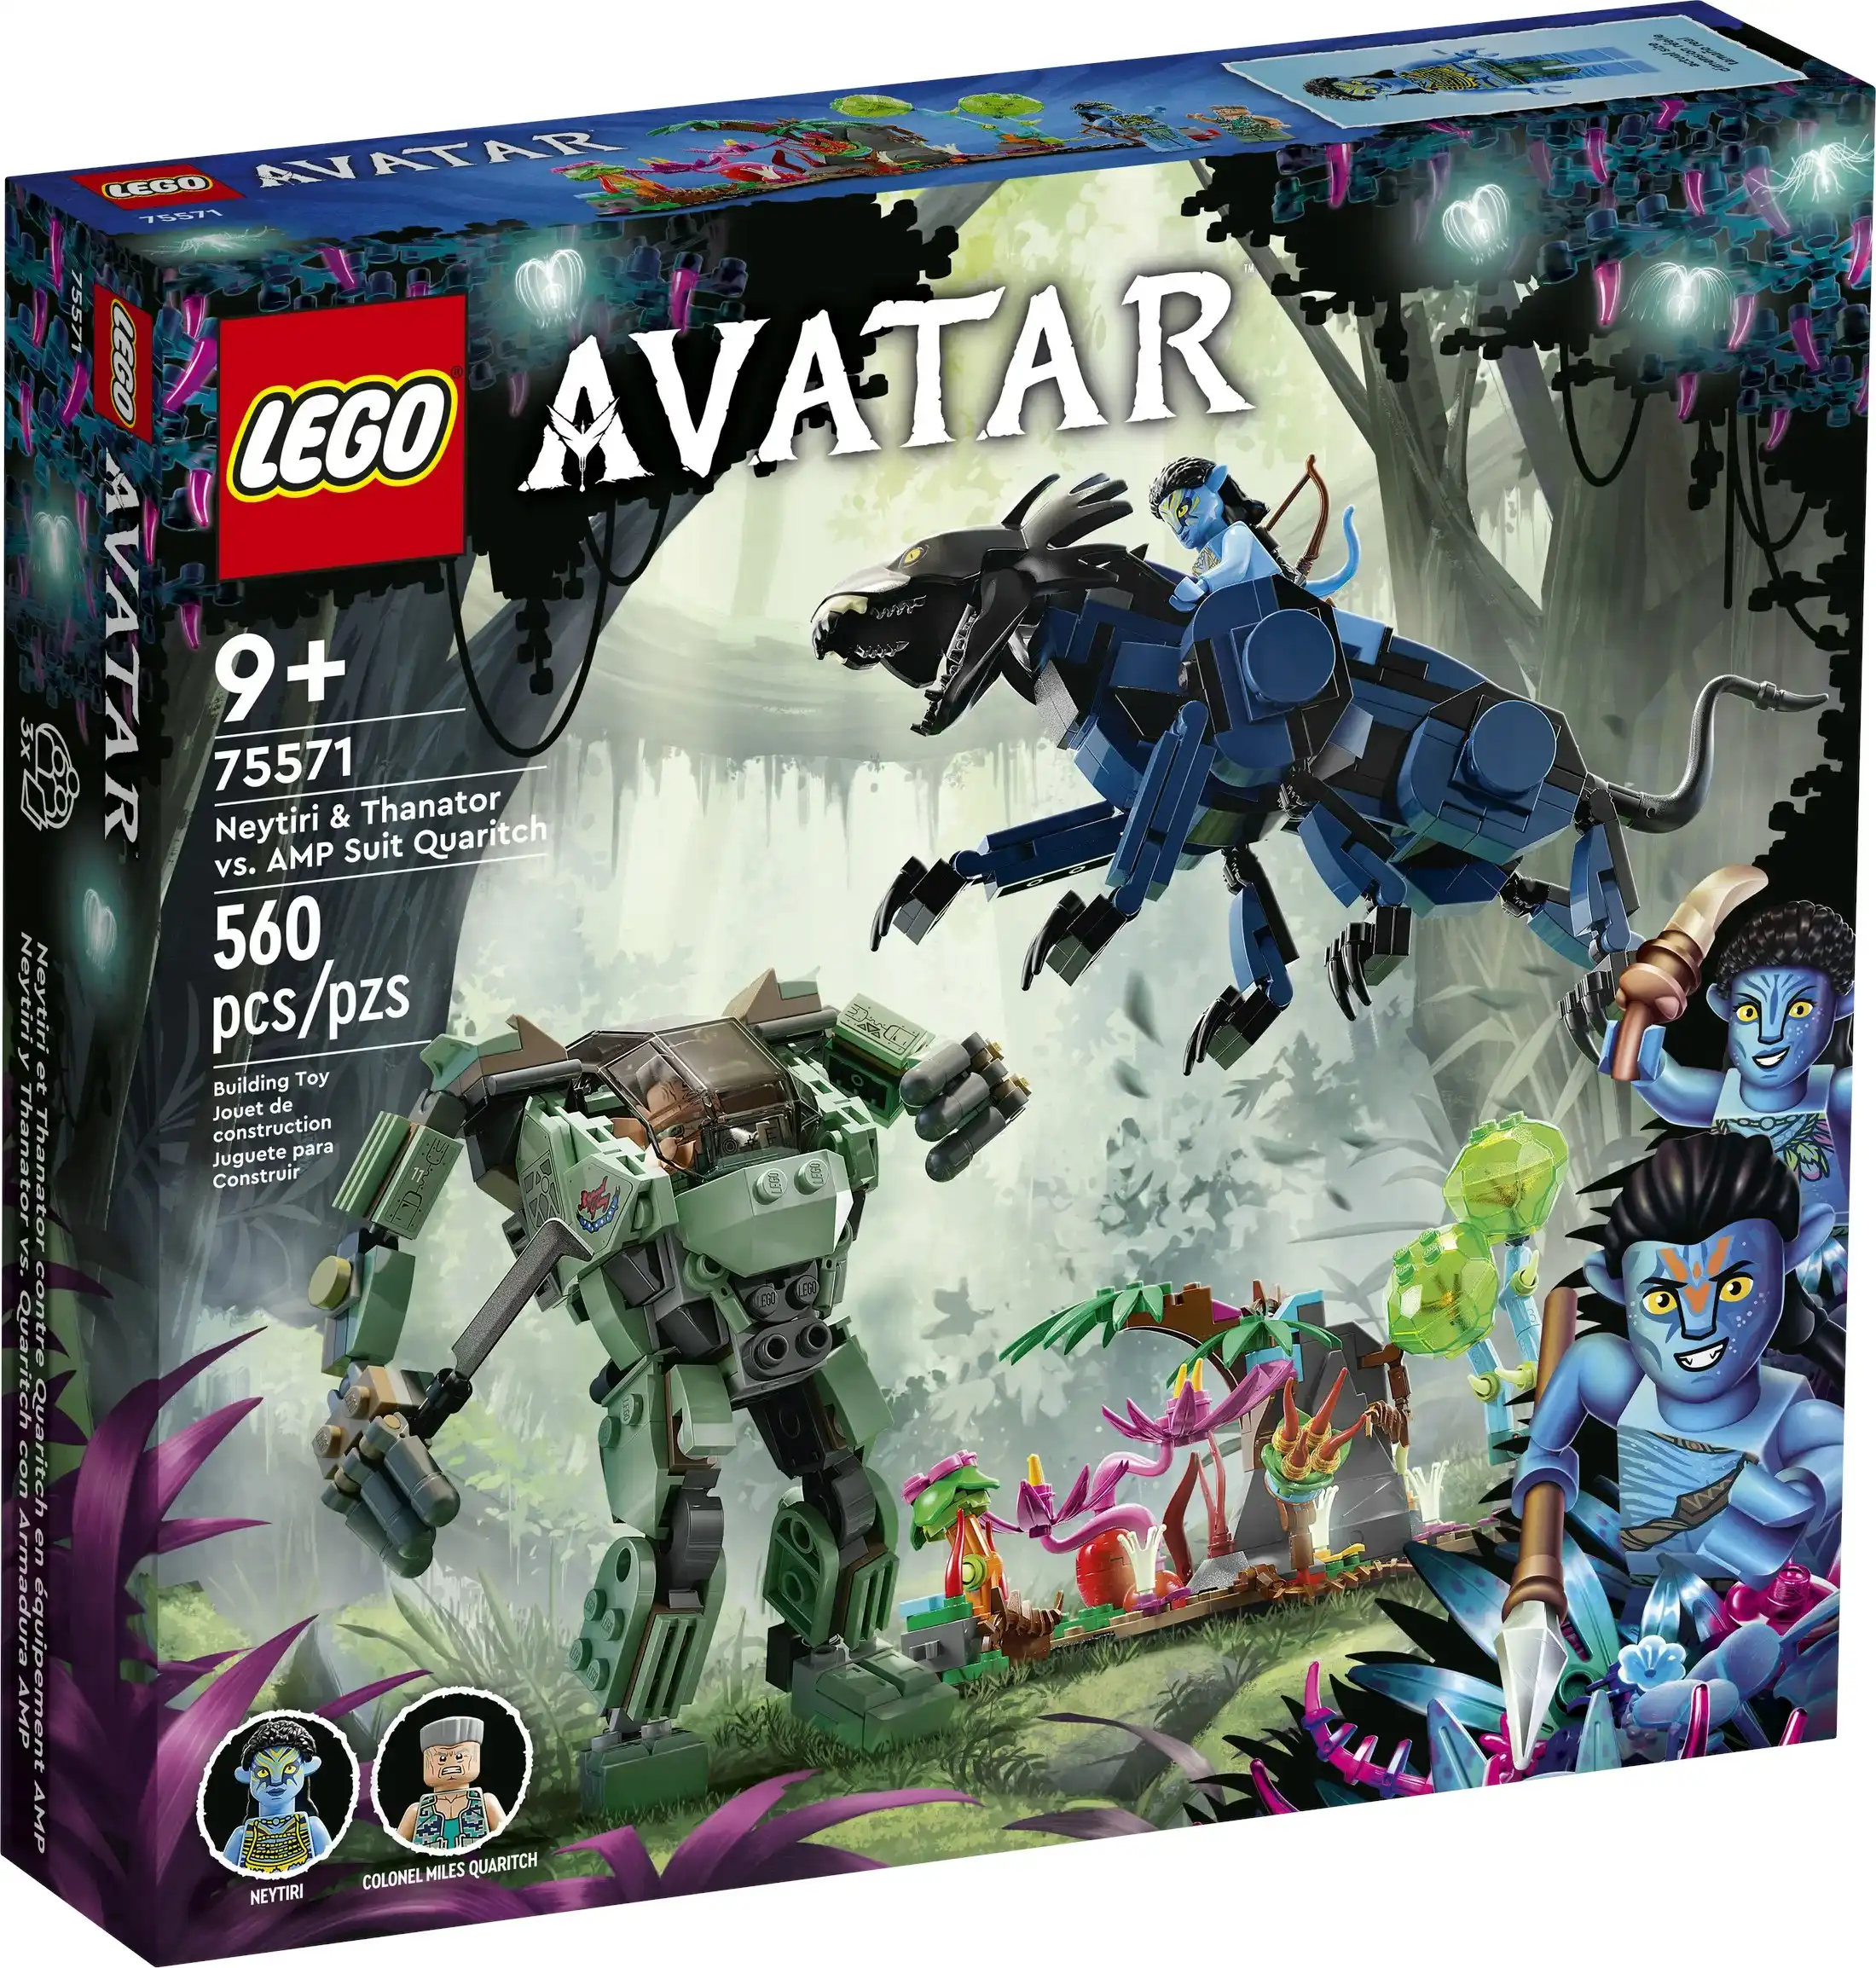 LEGO 75571 Neytiri & Thanator vs. AMP Suit Quaritch - Avatar